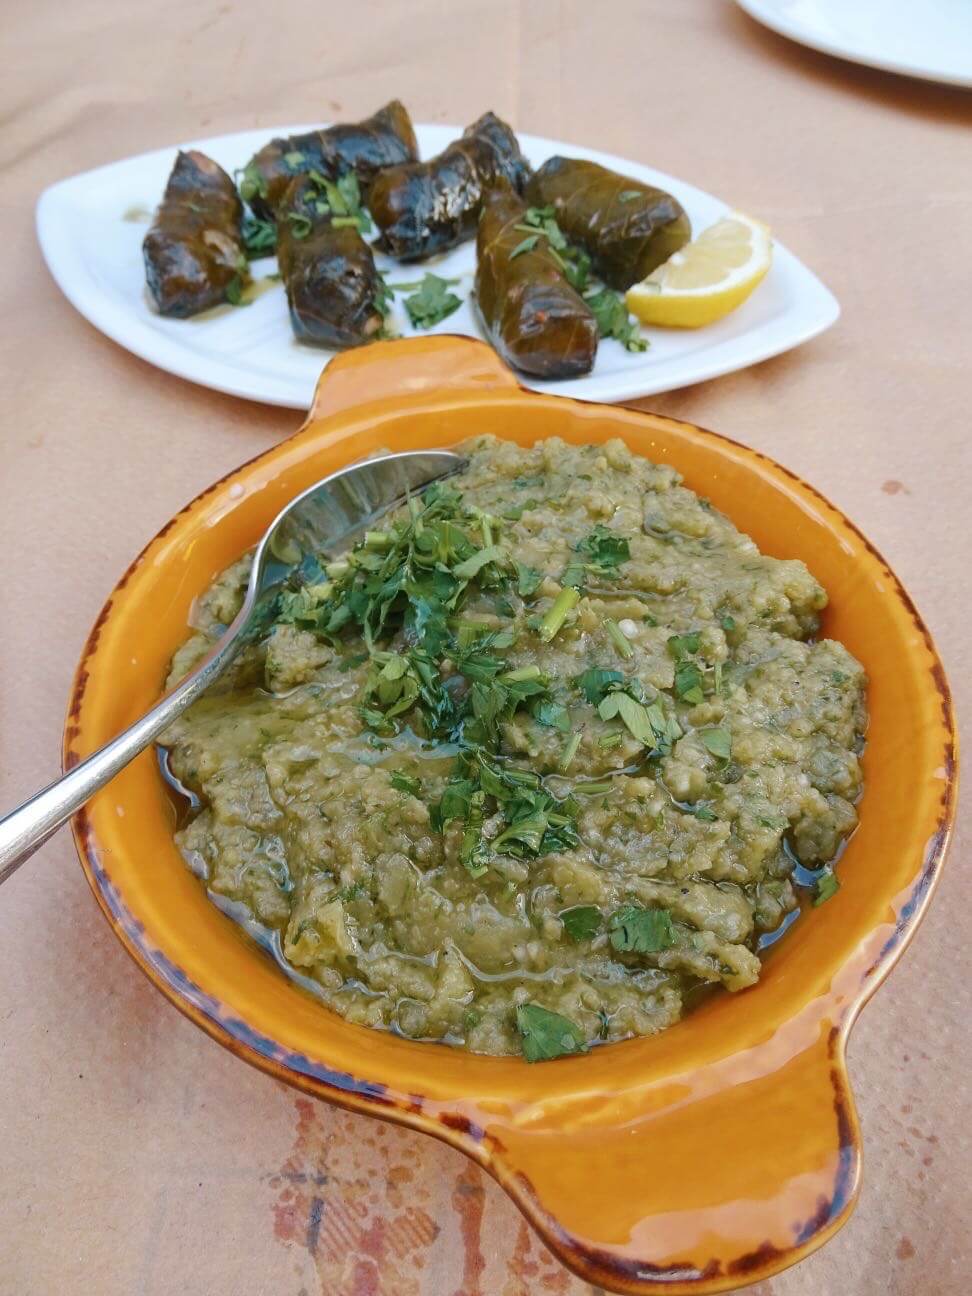 Albanian food